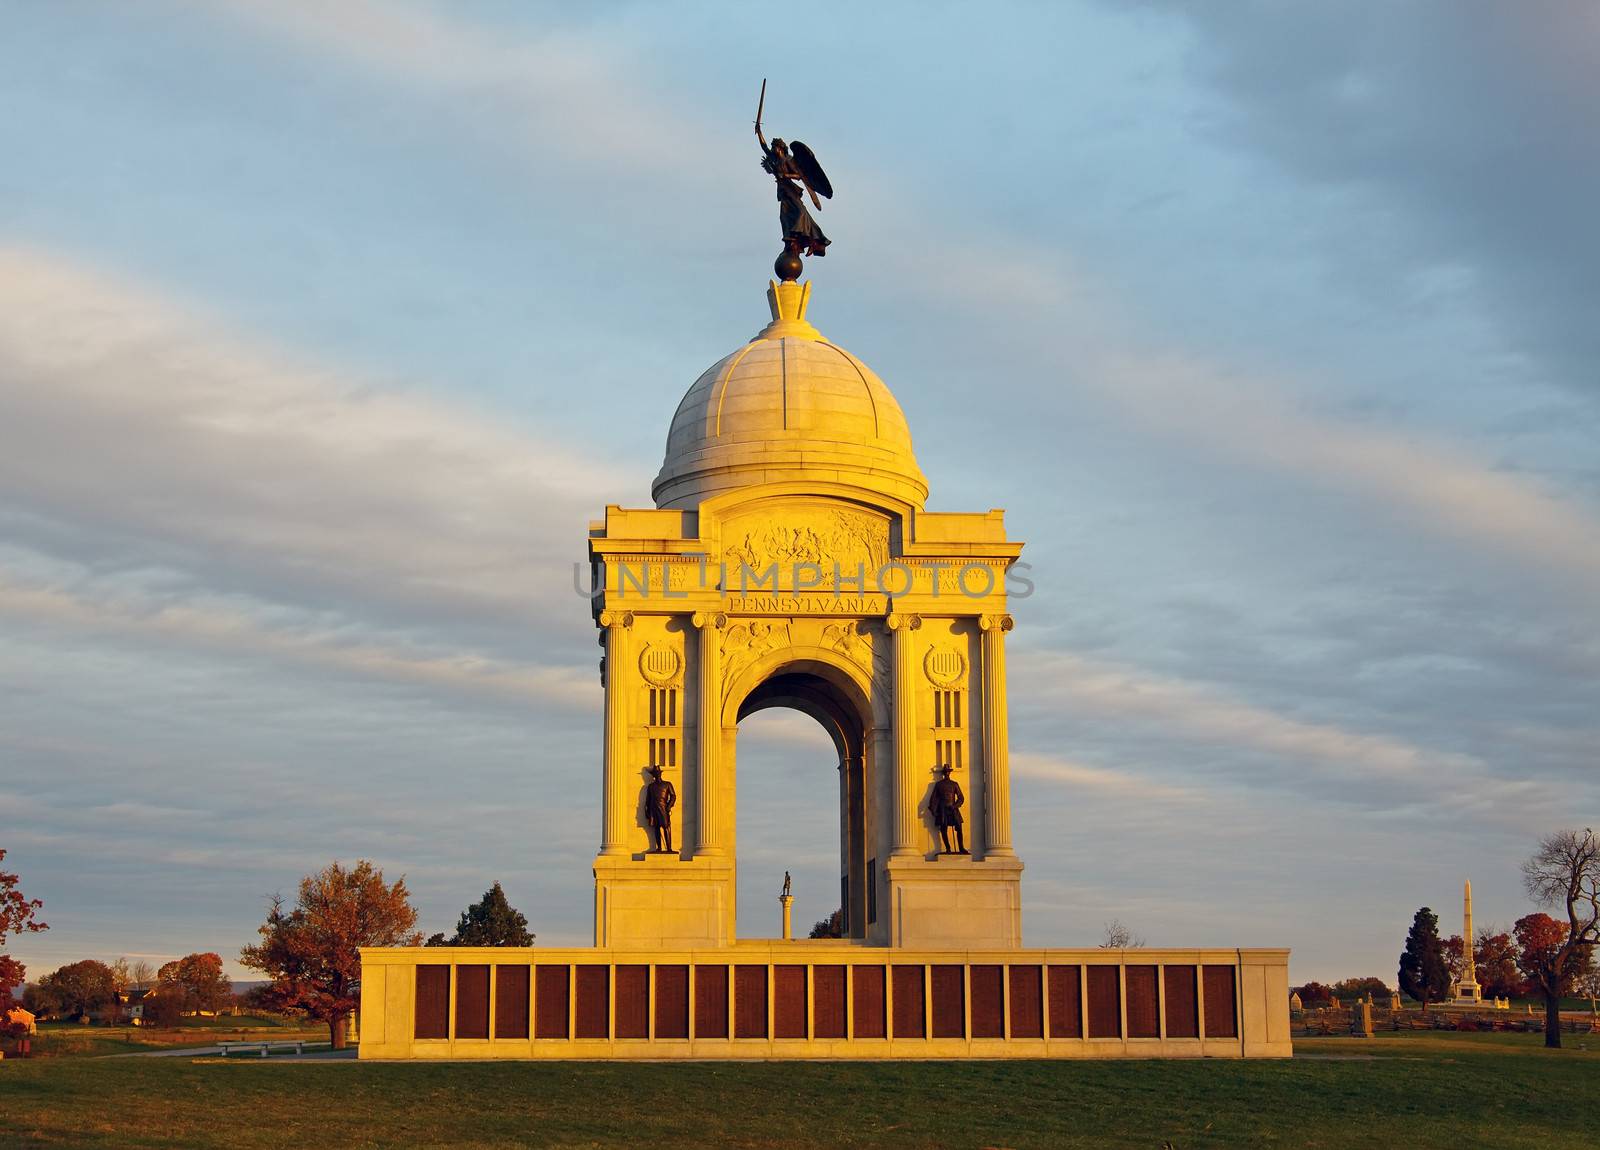 Pennsylvania Monument in Gettysburg by DelmasLehman